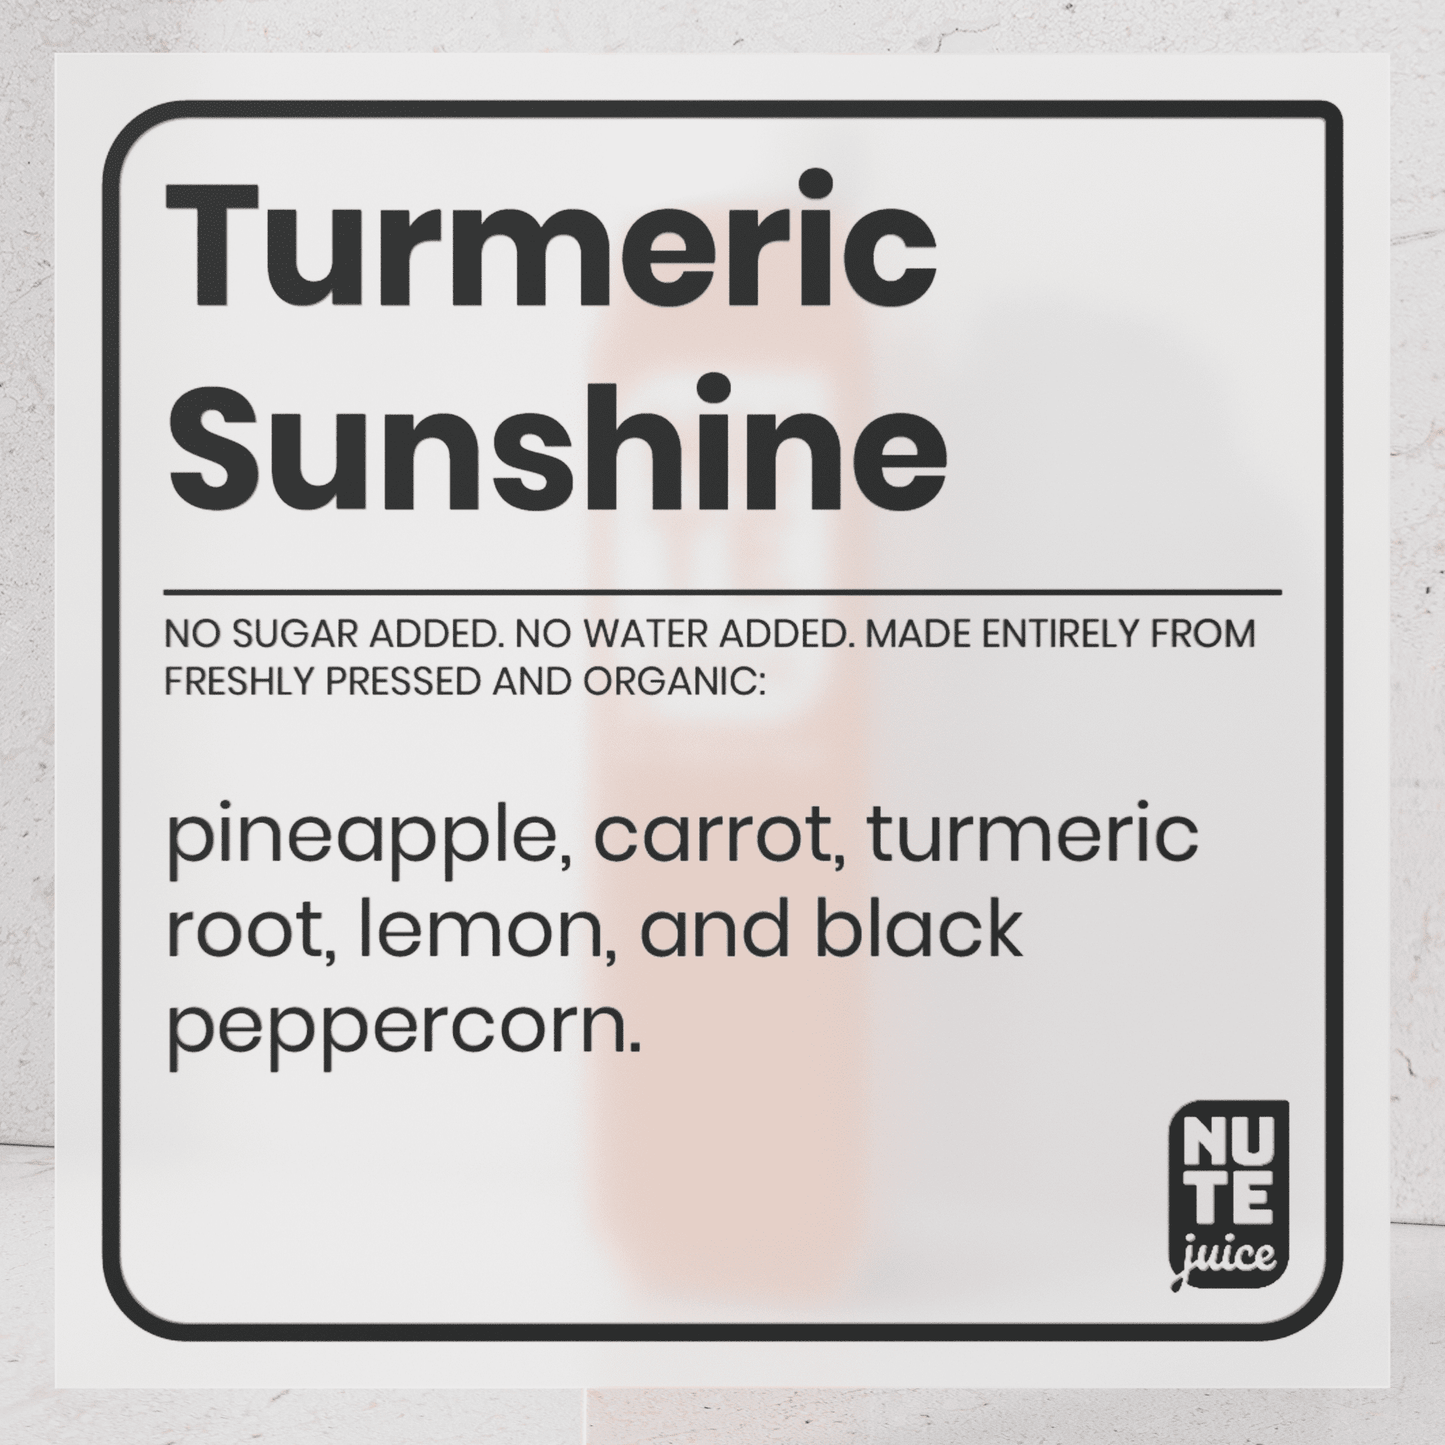 Turmeric Sunshine